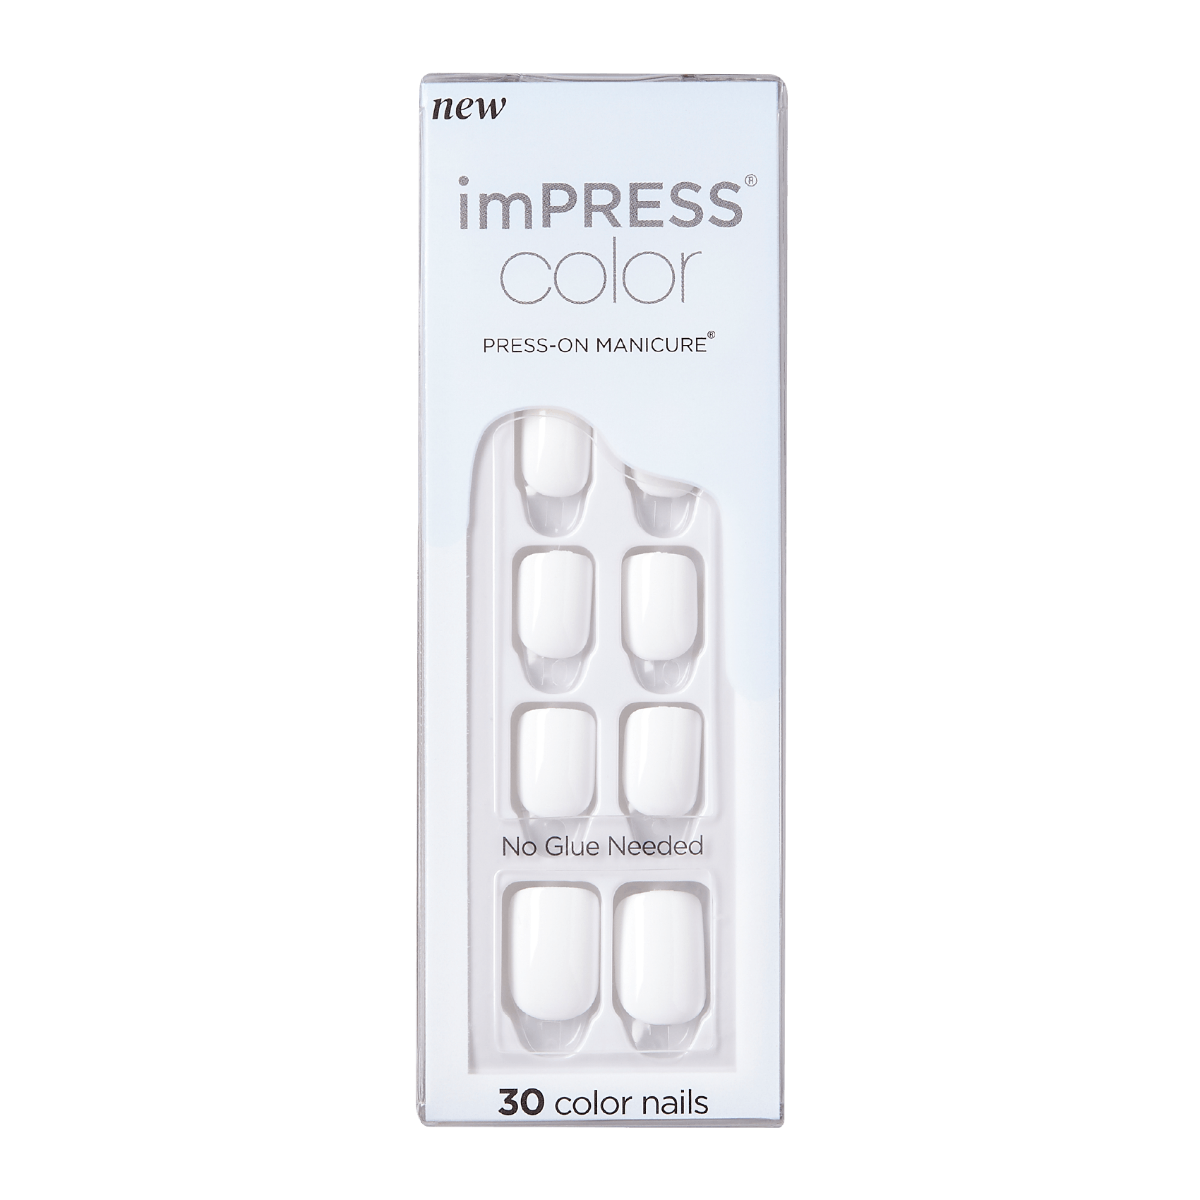 KISS ImPRESS Color Press-On Manicure - Sumptuous - Taille S